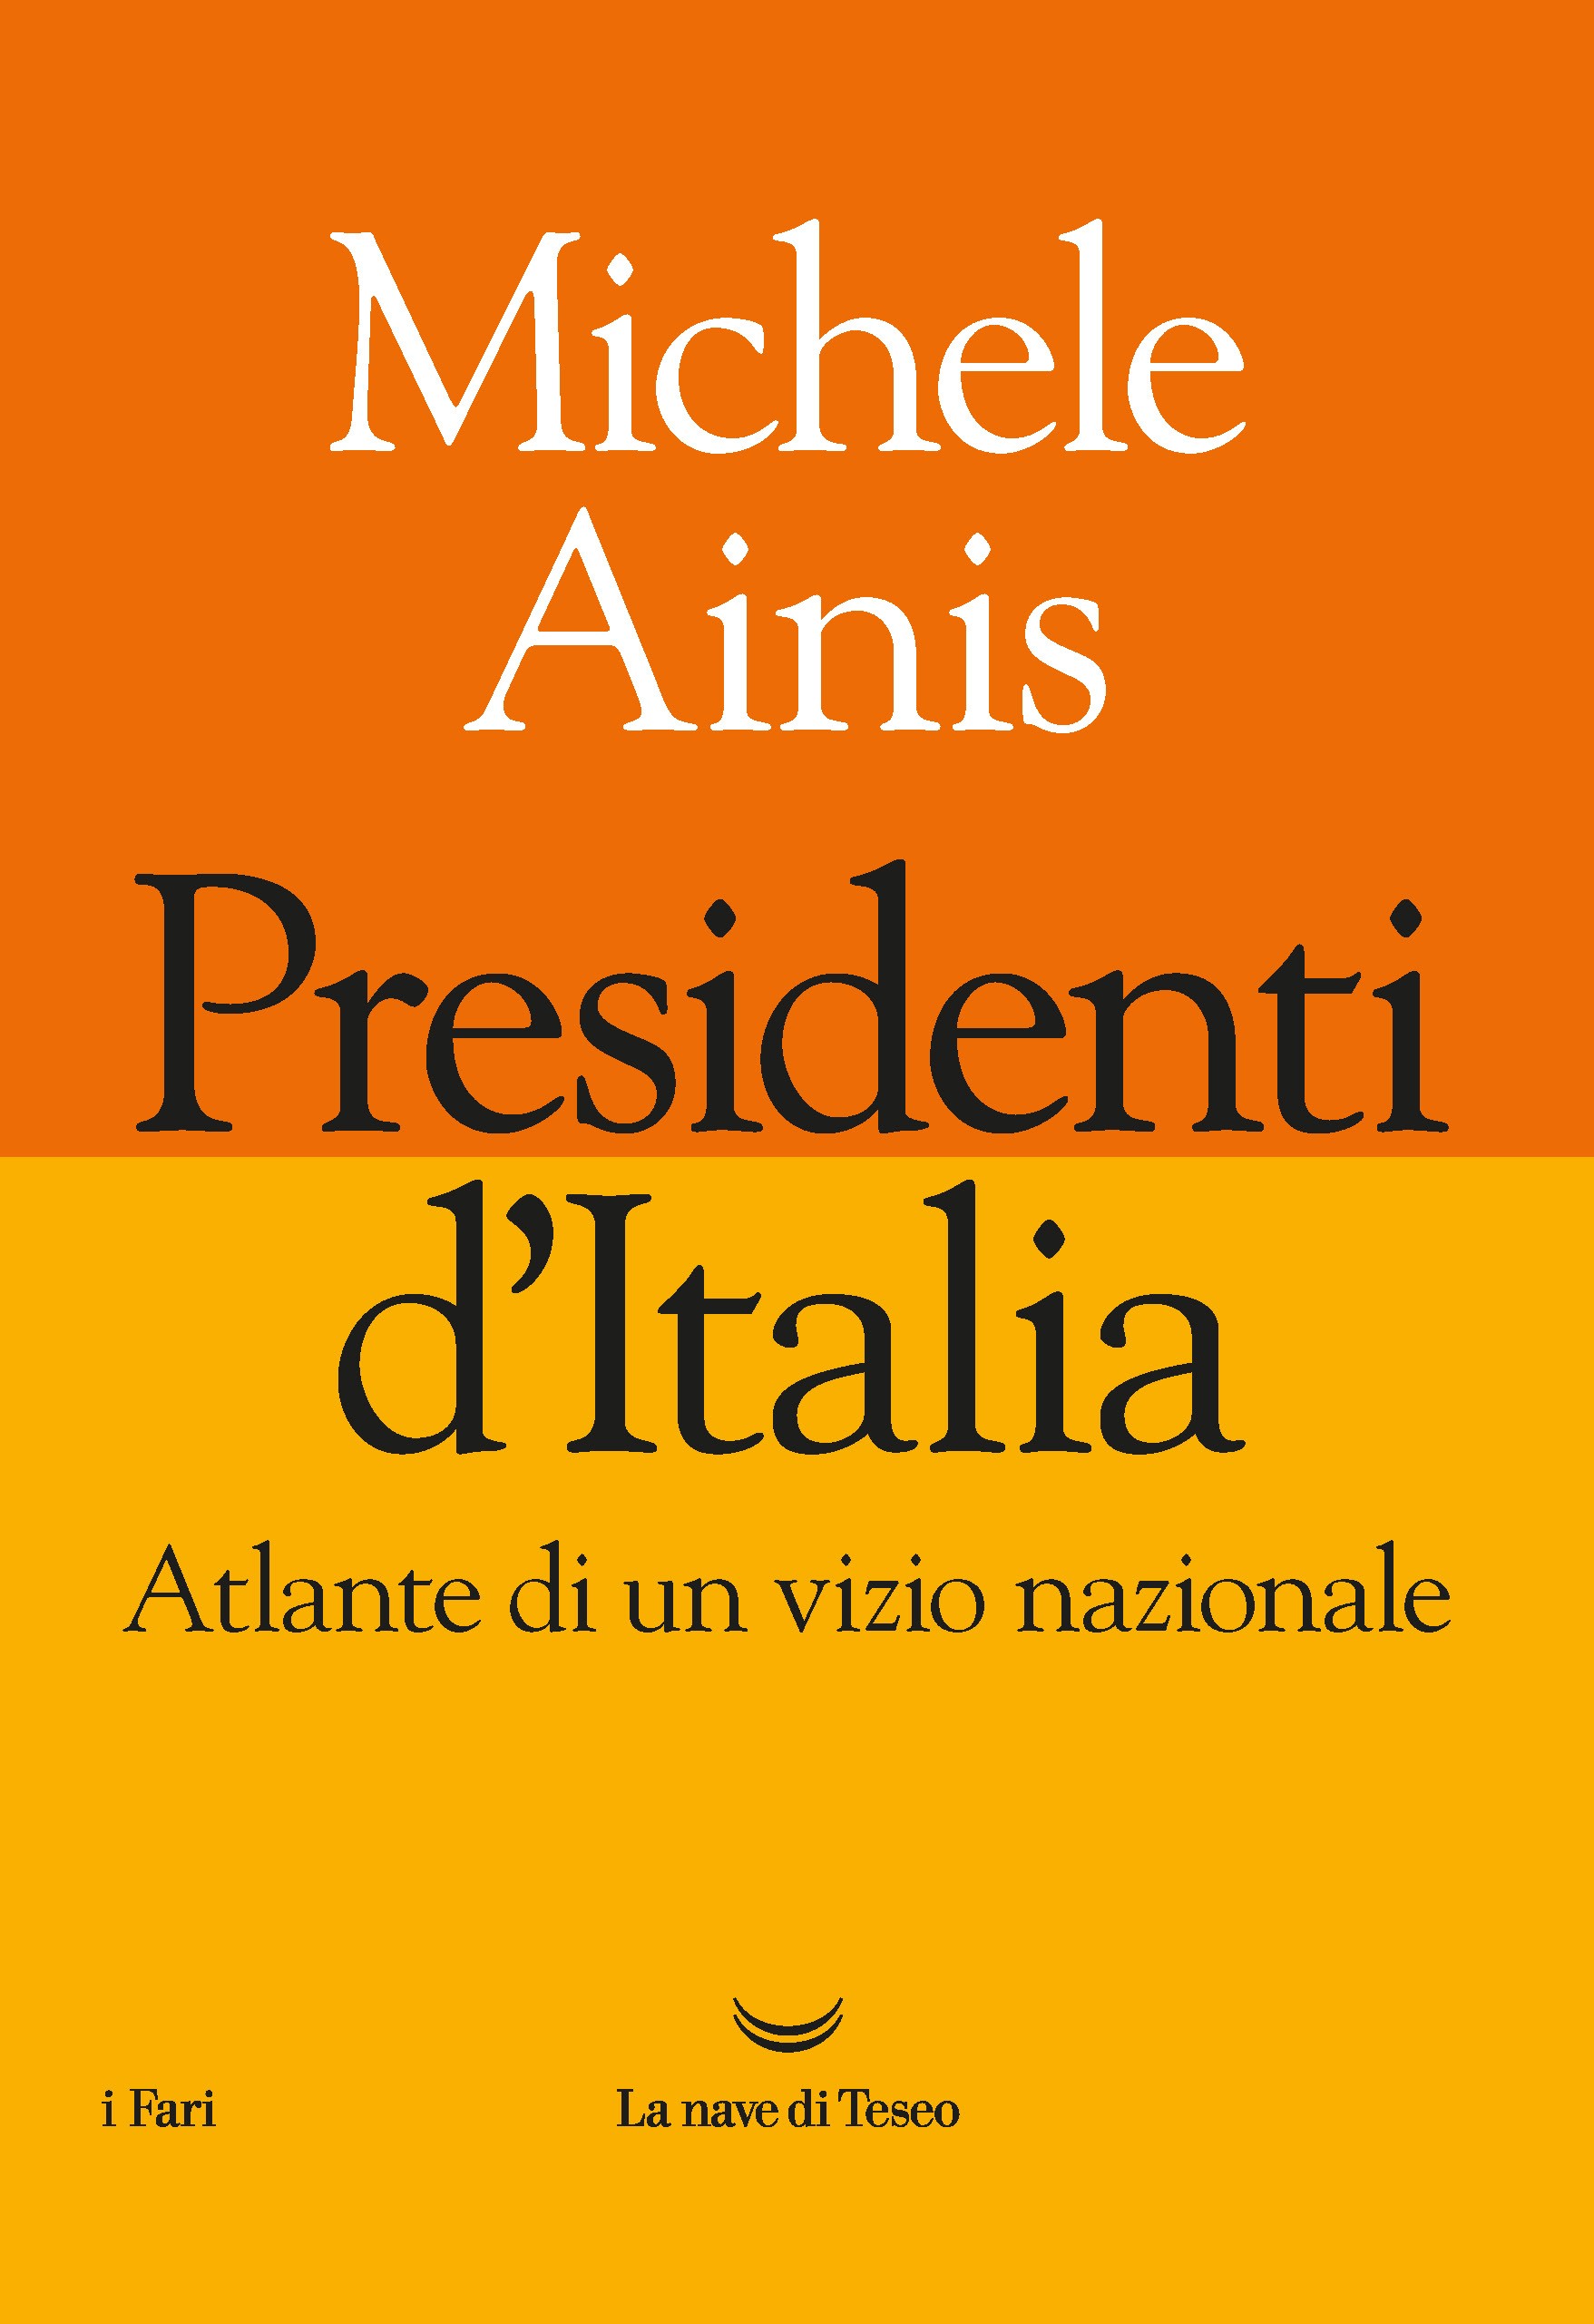 Presidenti d'Italia - Librerie.coop